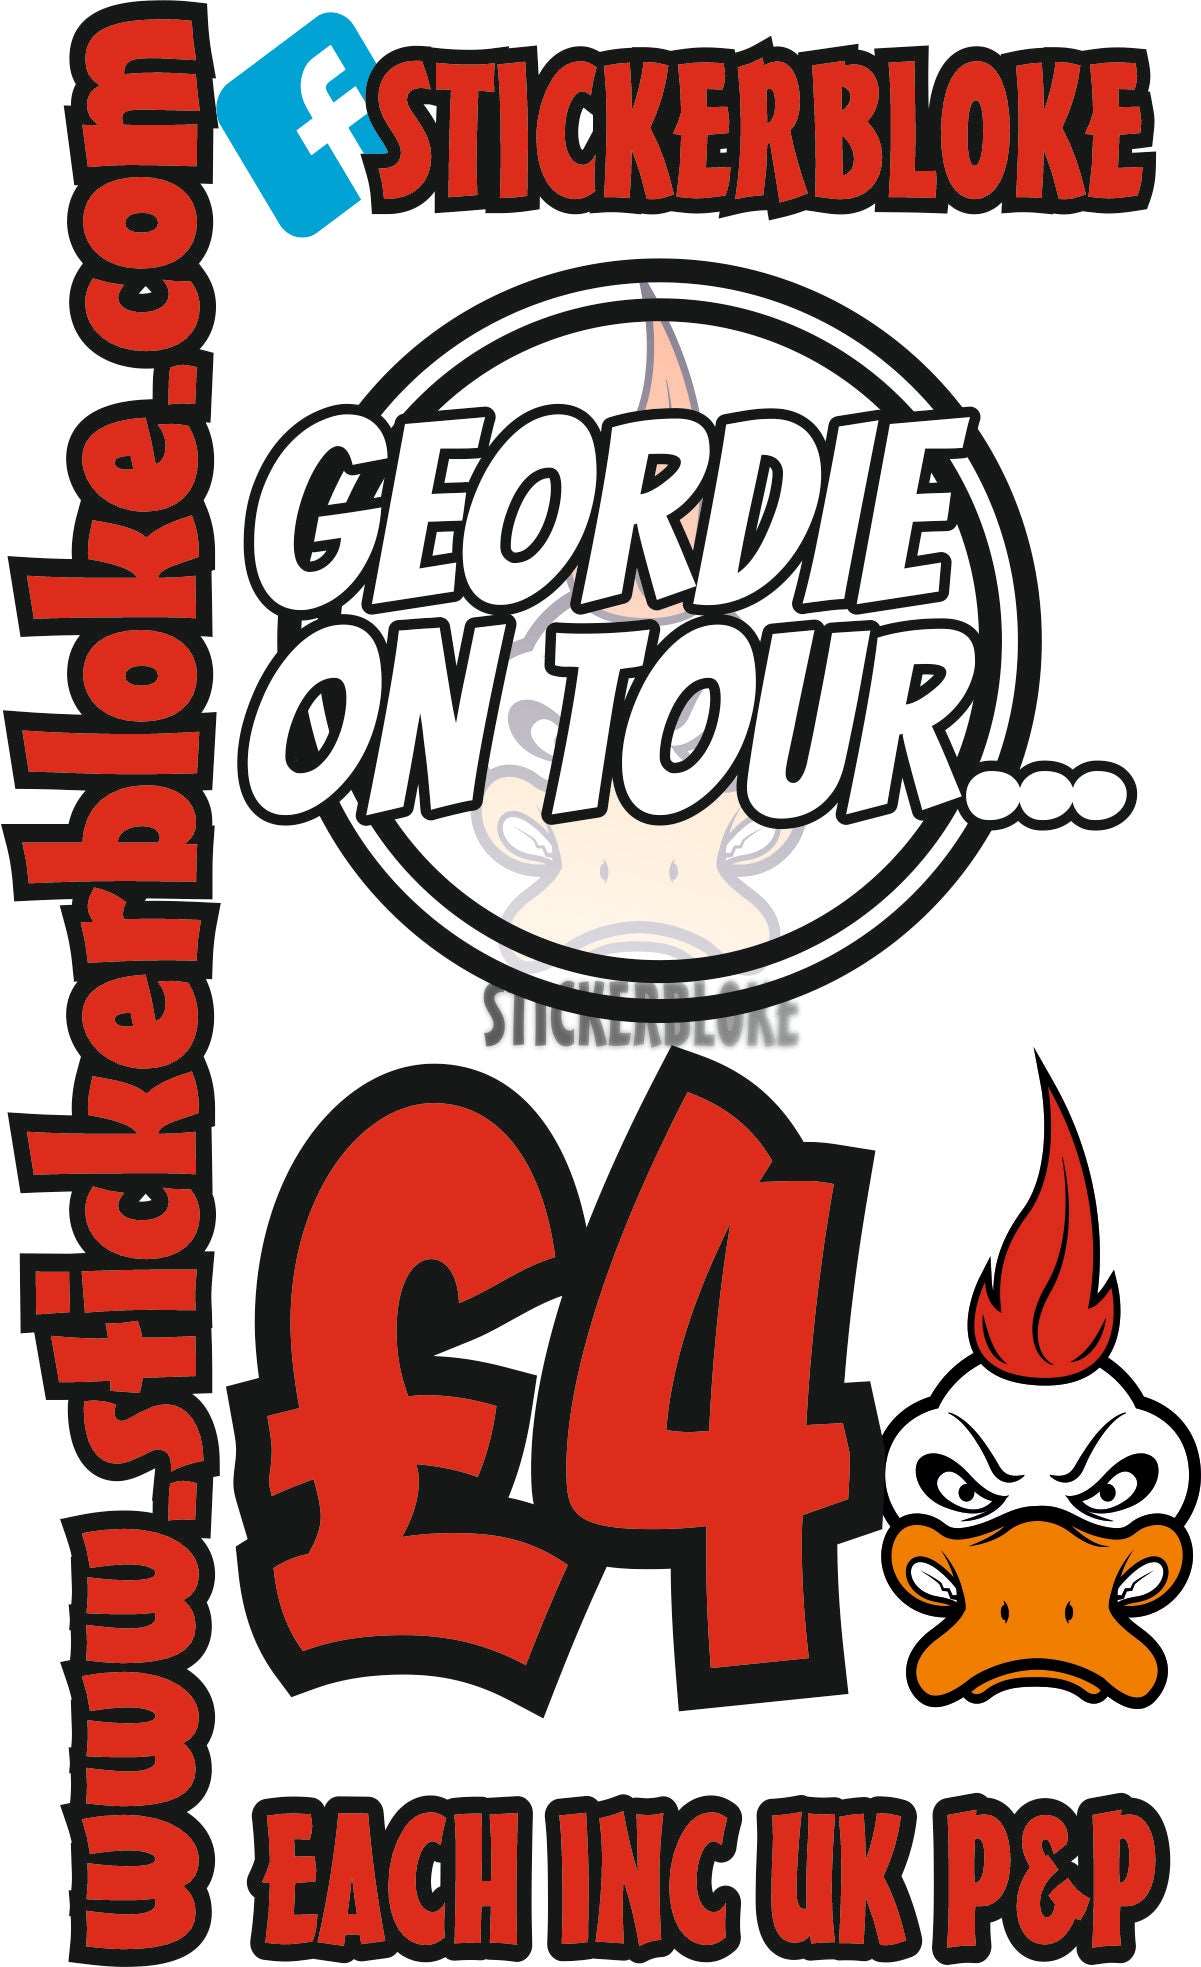 GEORDIE ON TOUR - STICKERBLOKE